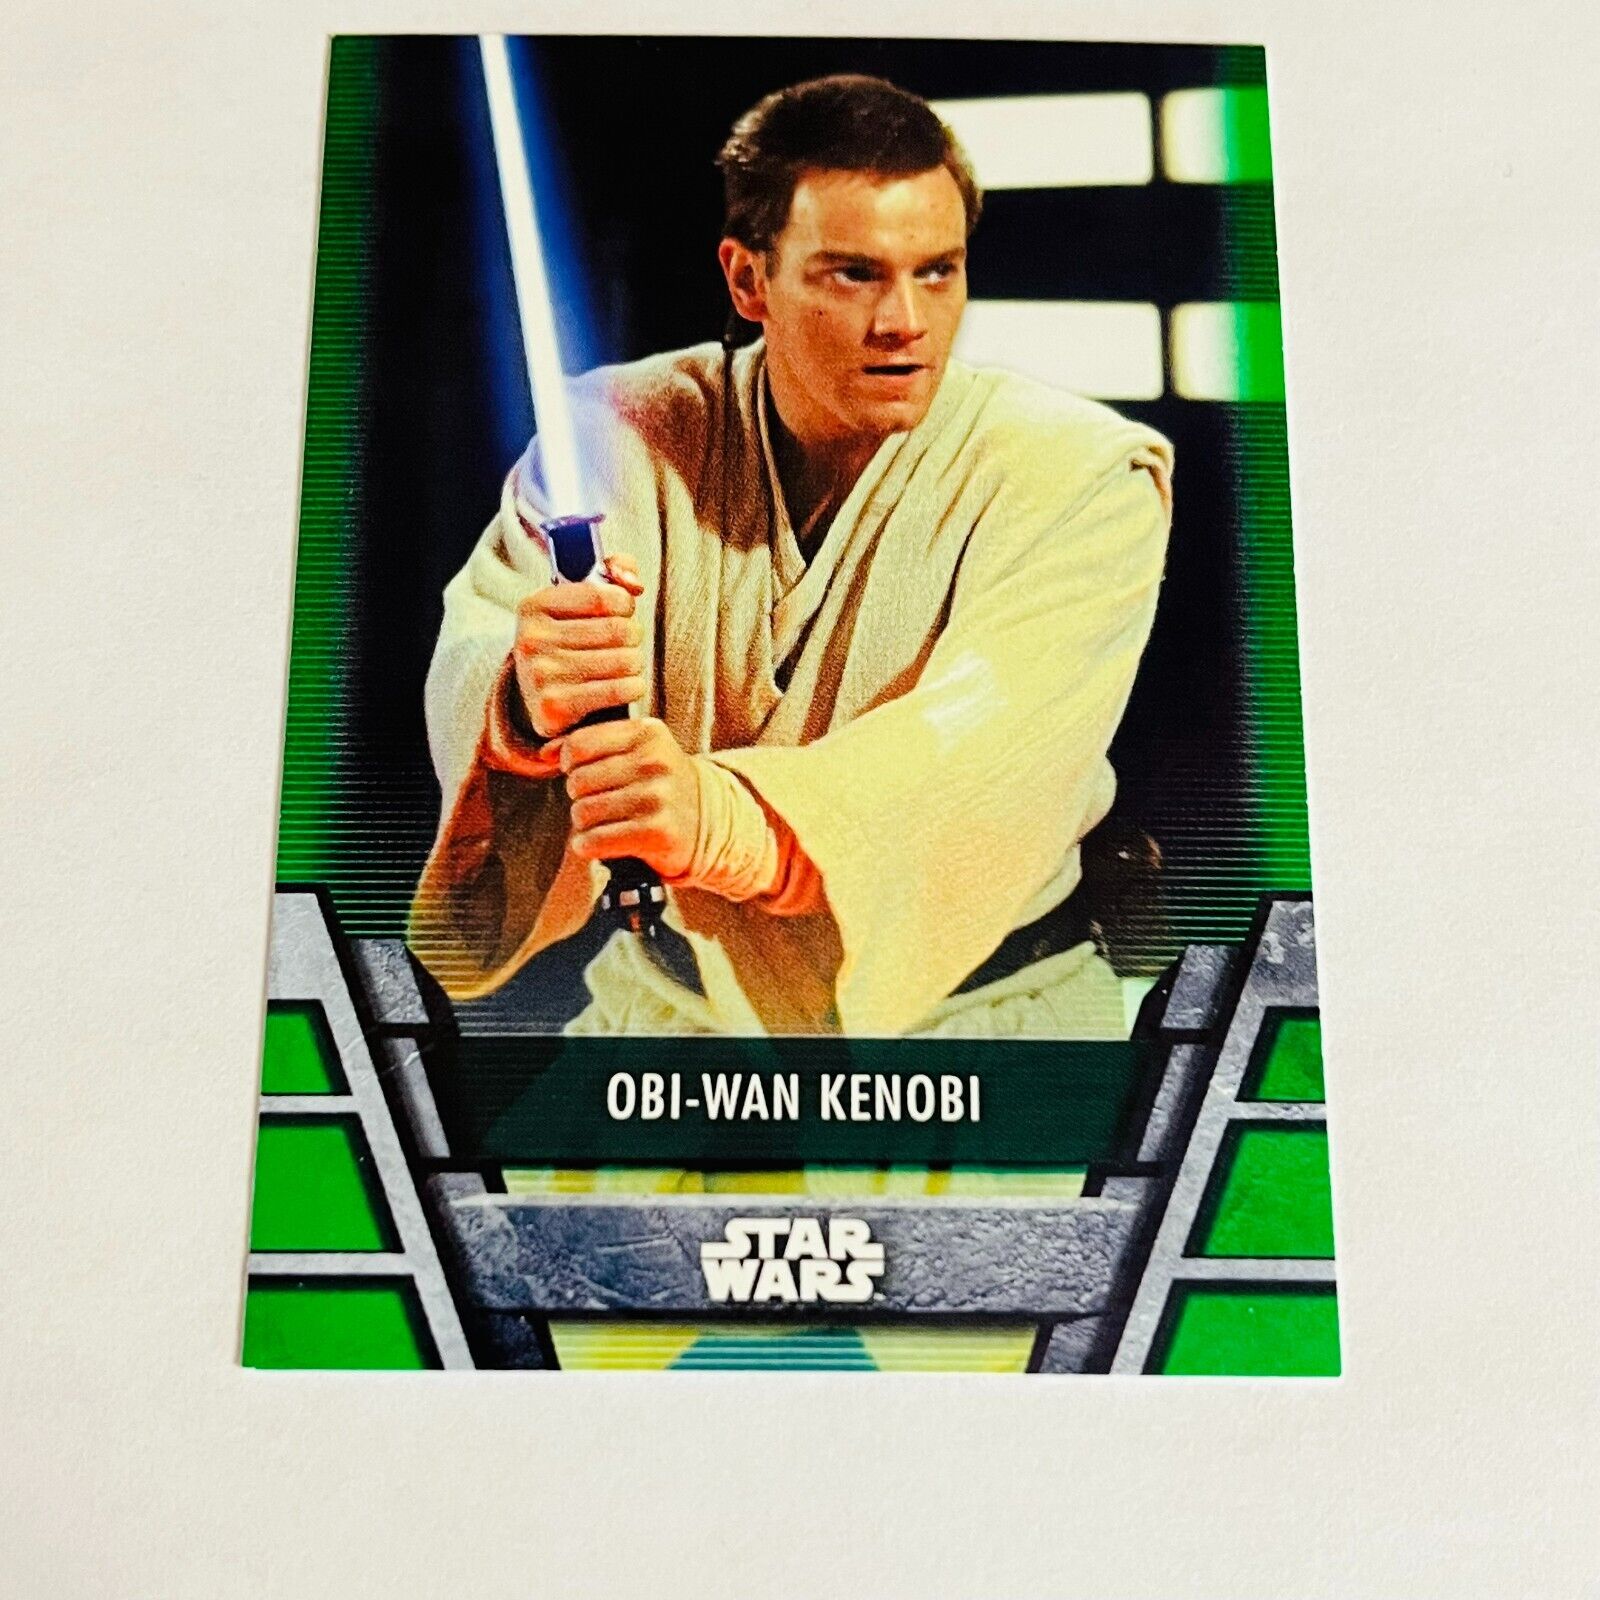 2020 Topps Star Wars Holocron Green Parallel Base Card Jedi-1 Obi-Wan Kenobi